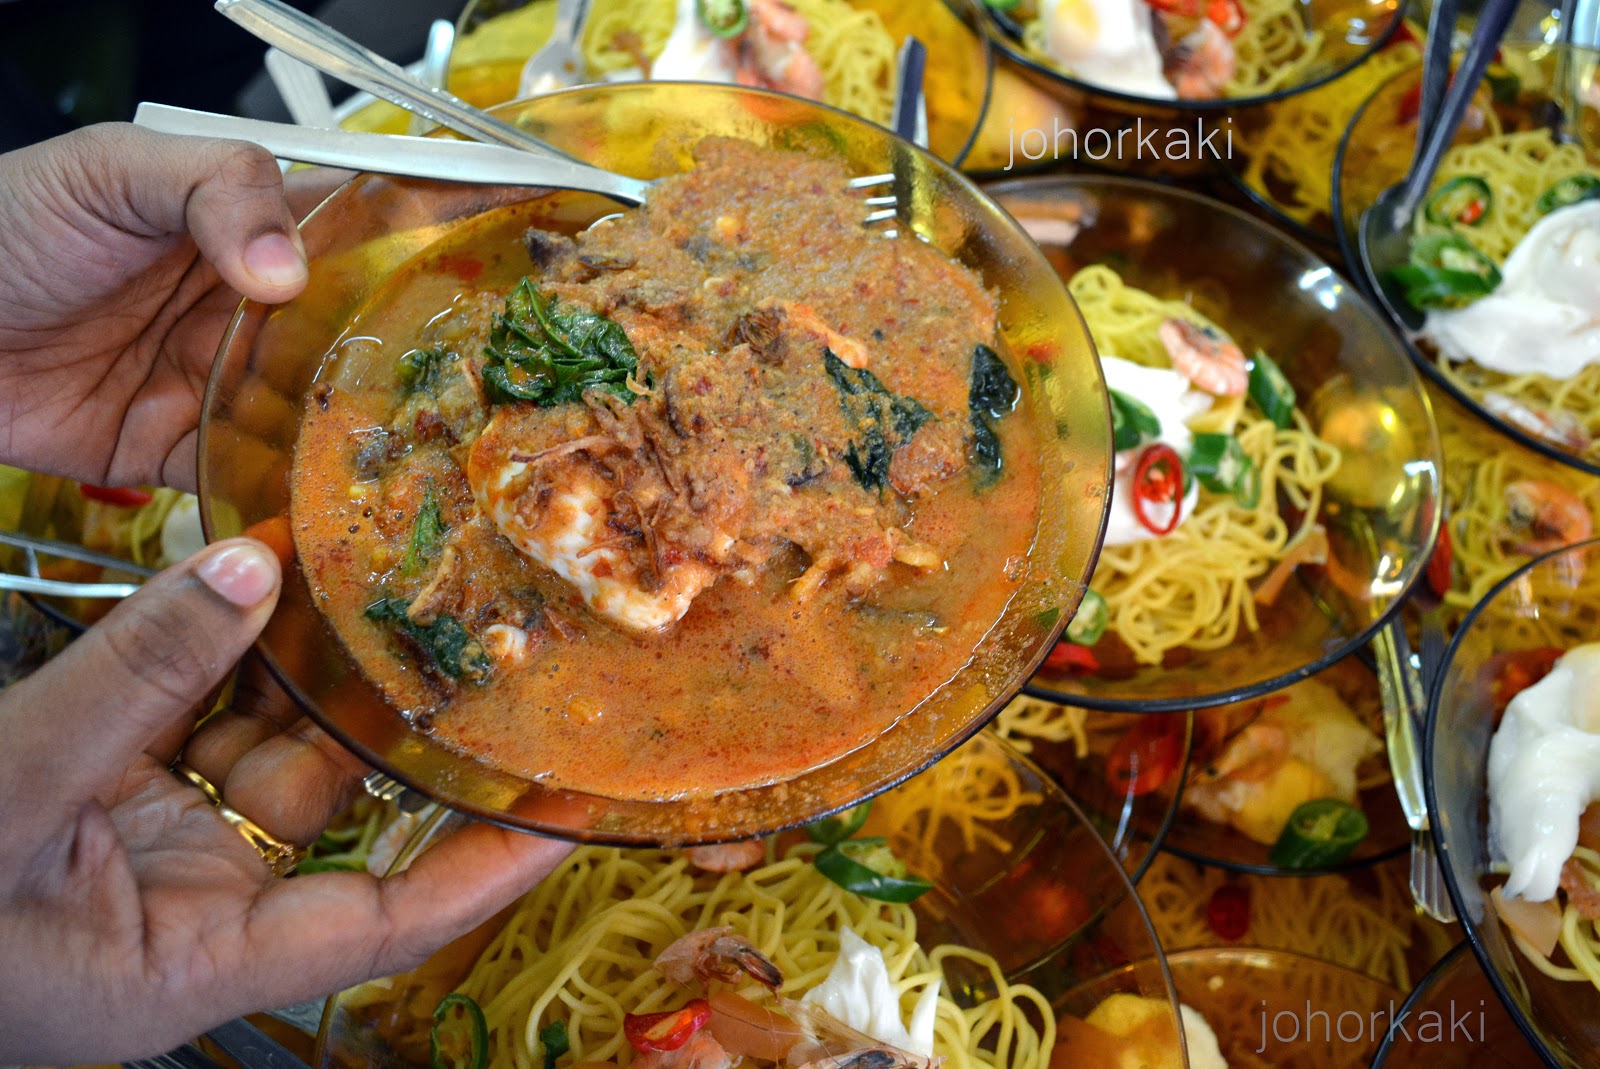 Top 10 Unique Johor Foods which Visitors Must Try - 2014 |Johor Kaki